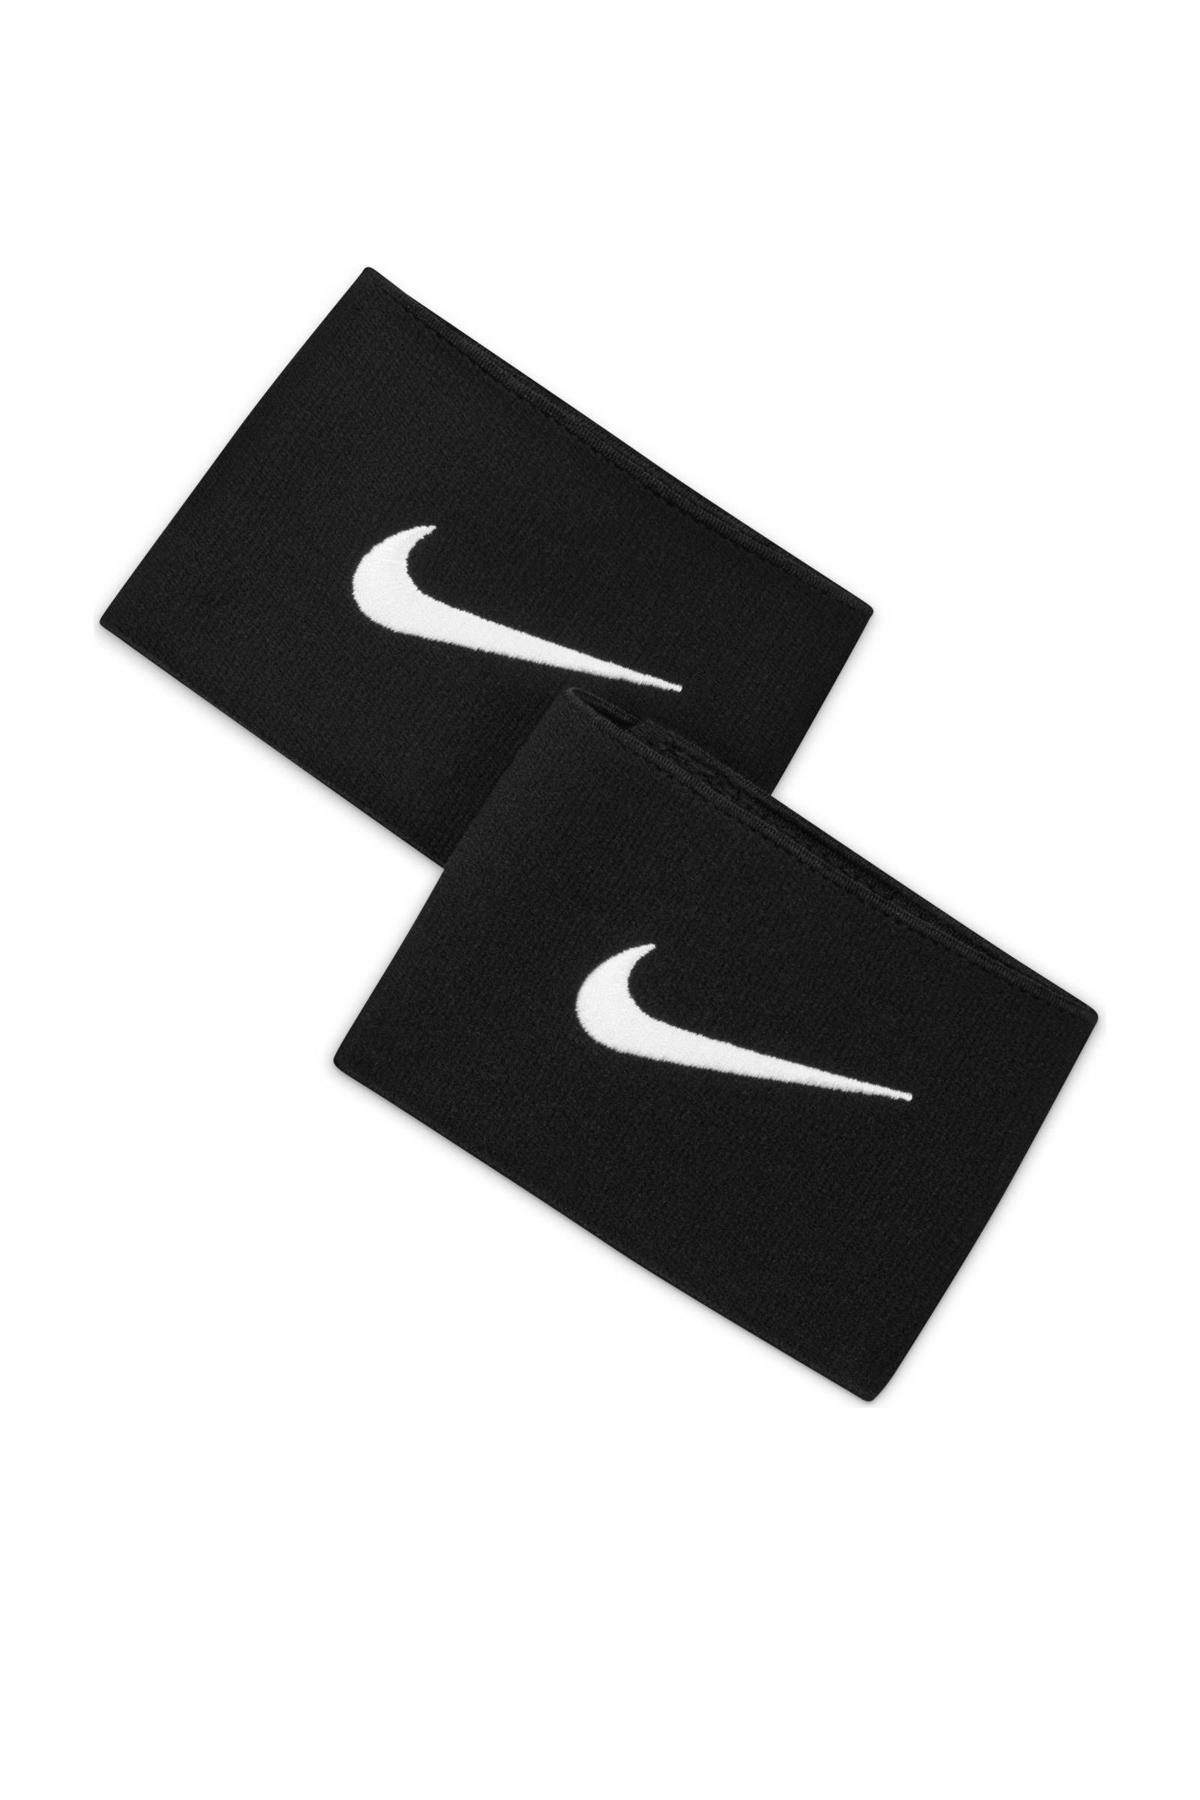 vlot Grondwet beddengoed Nike scheenbeschermer ophouders Guard Stay II zwart | wehkamp